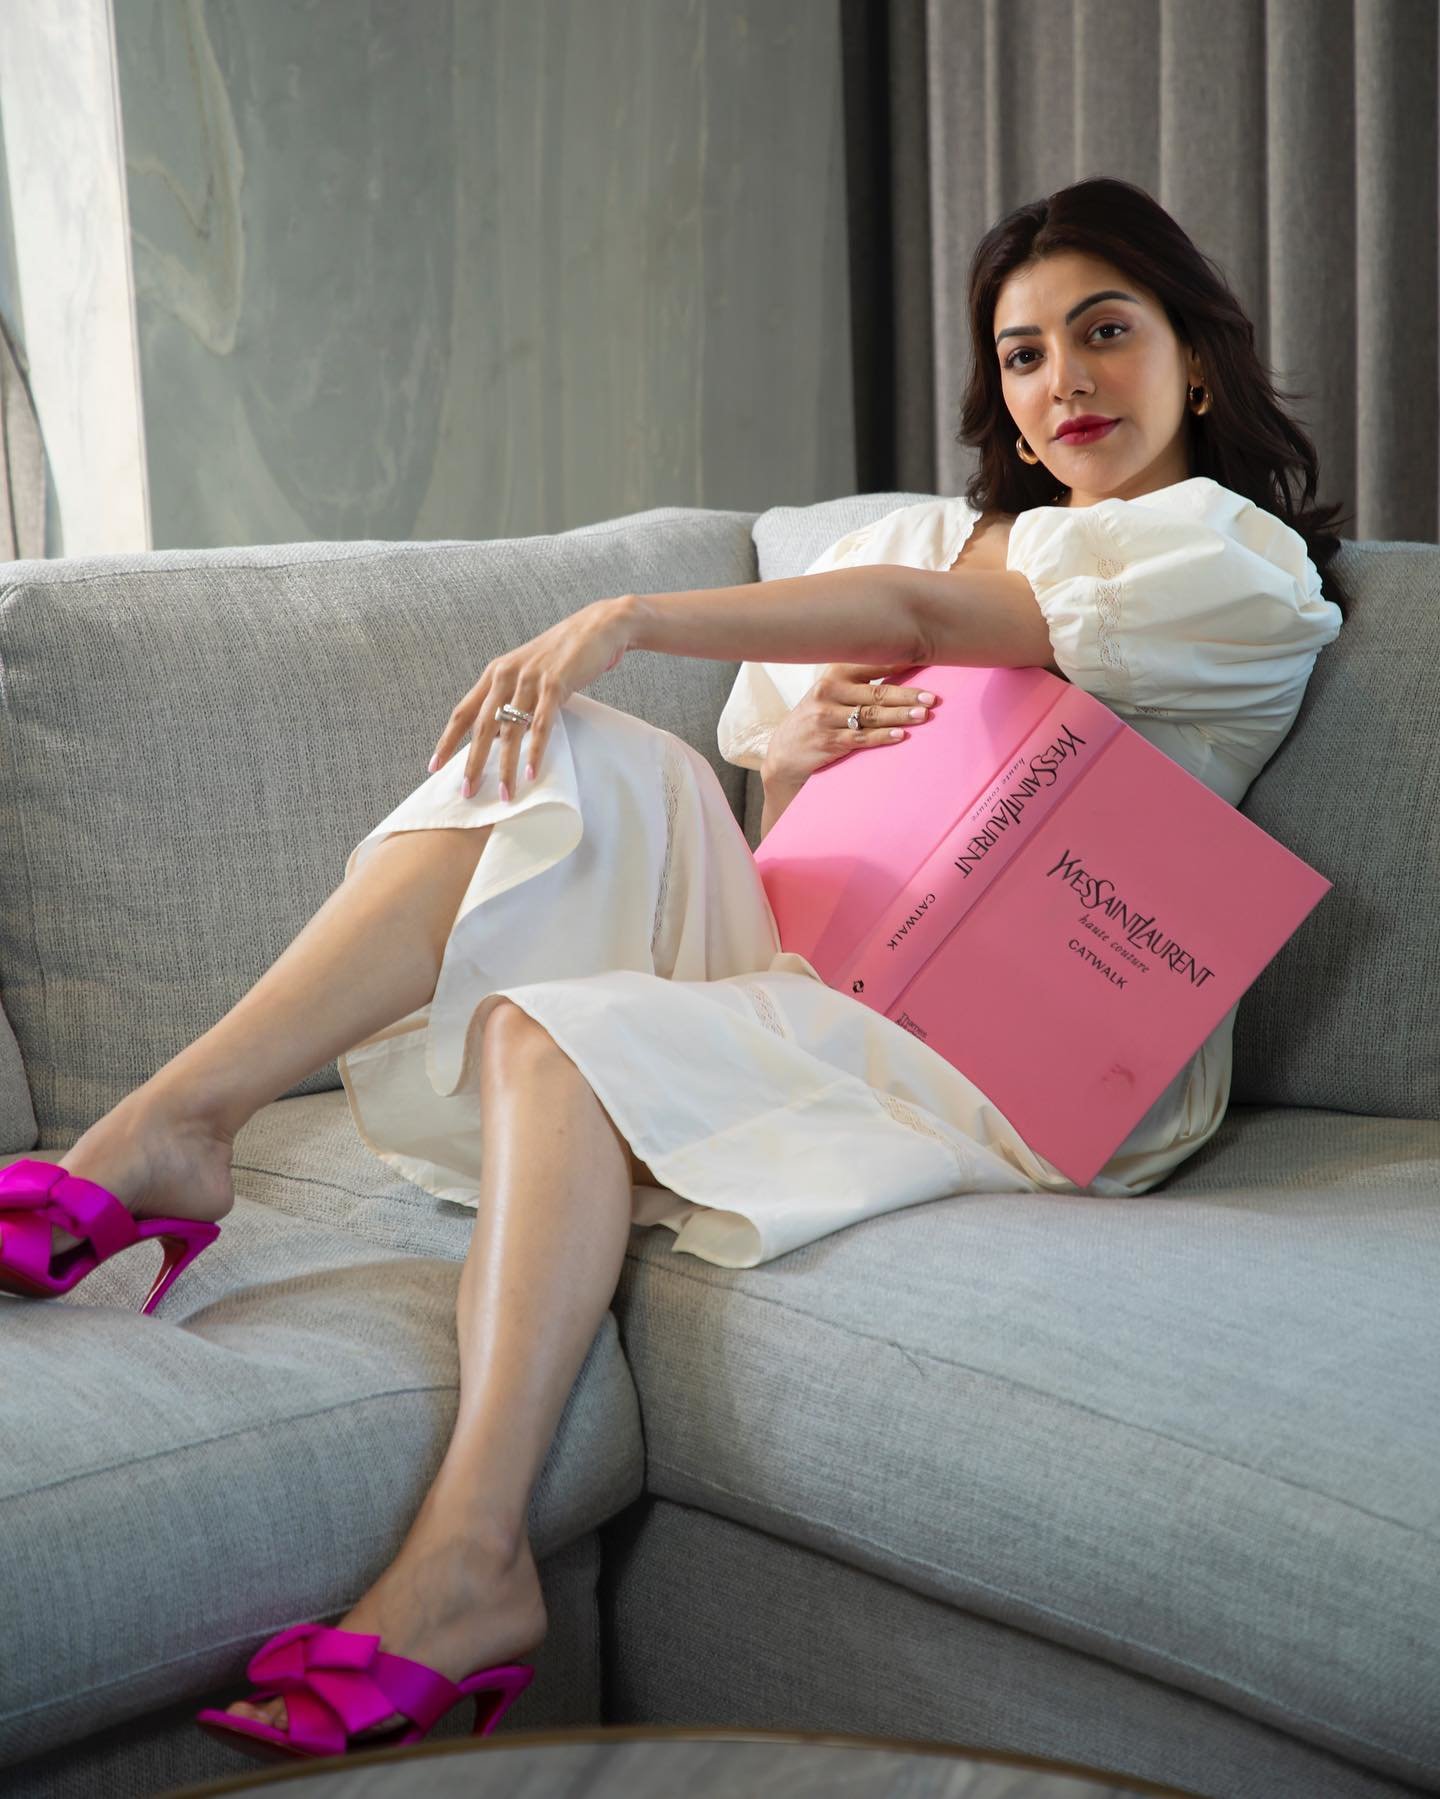 Alia Bhatt nails pregnancy fashion in oversized shirt as she poses